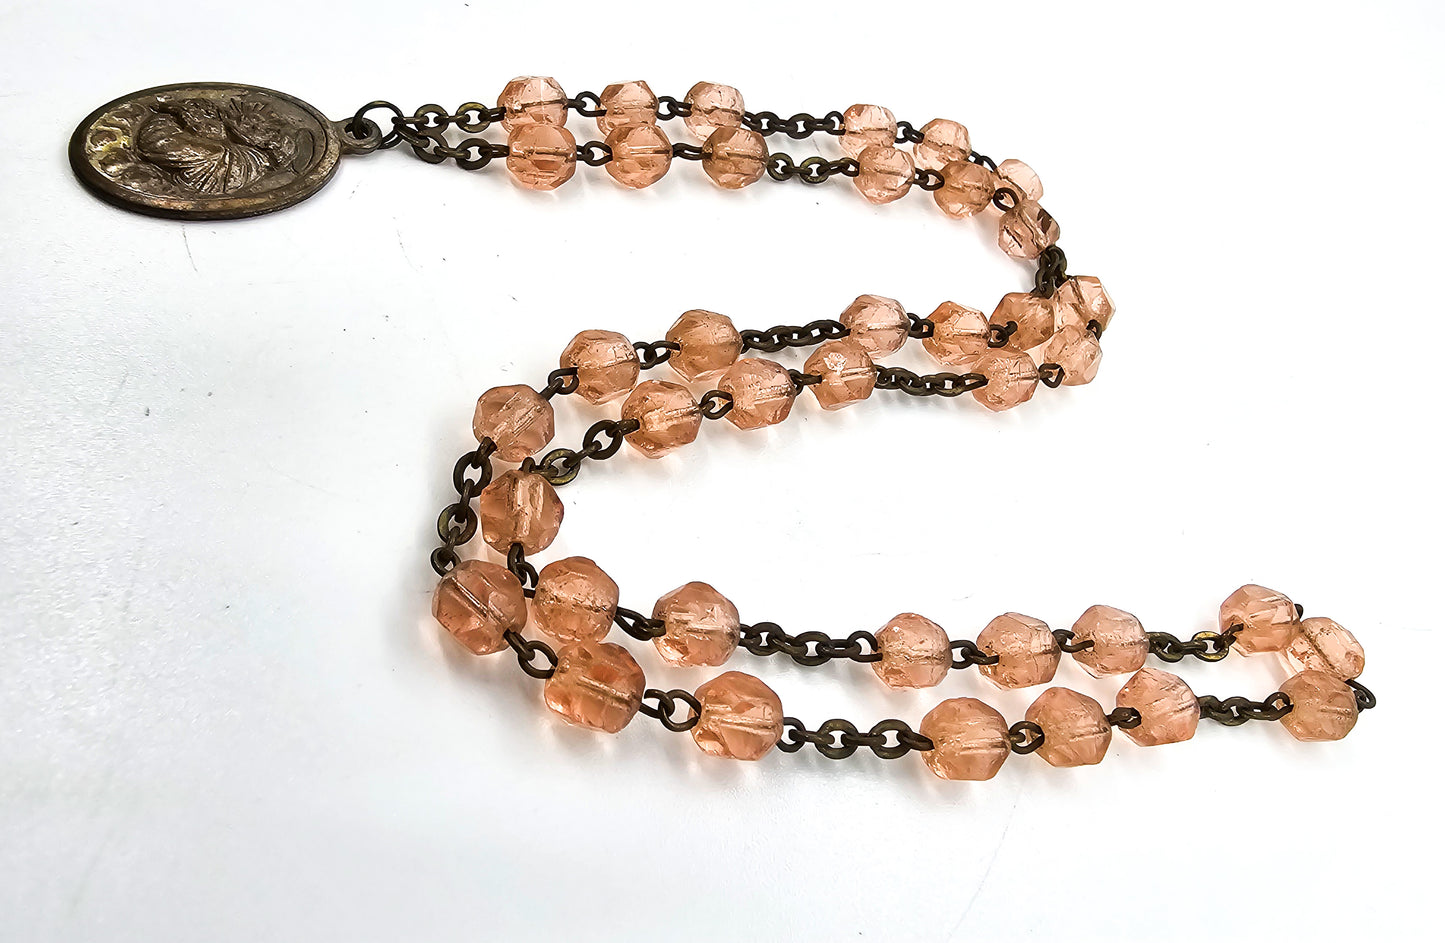 St Anthony vintage pink Austrian crystal mid century Italian prayer beads rosary